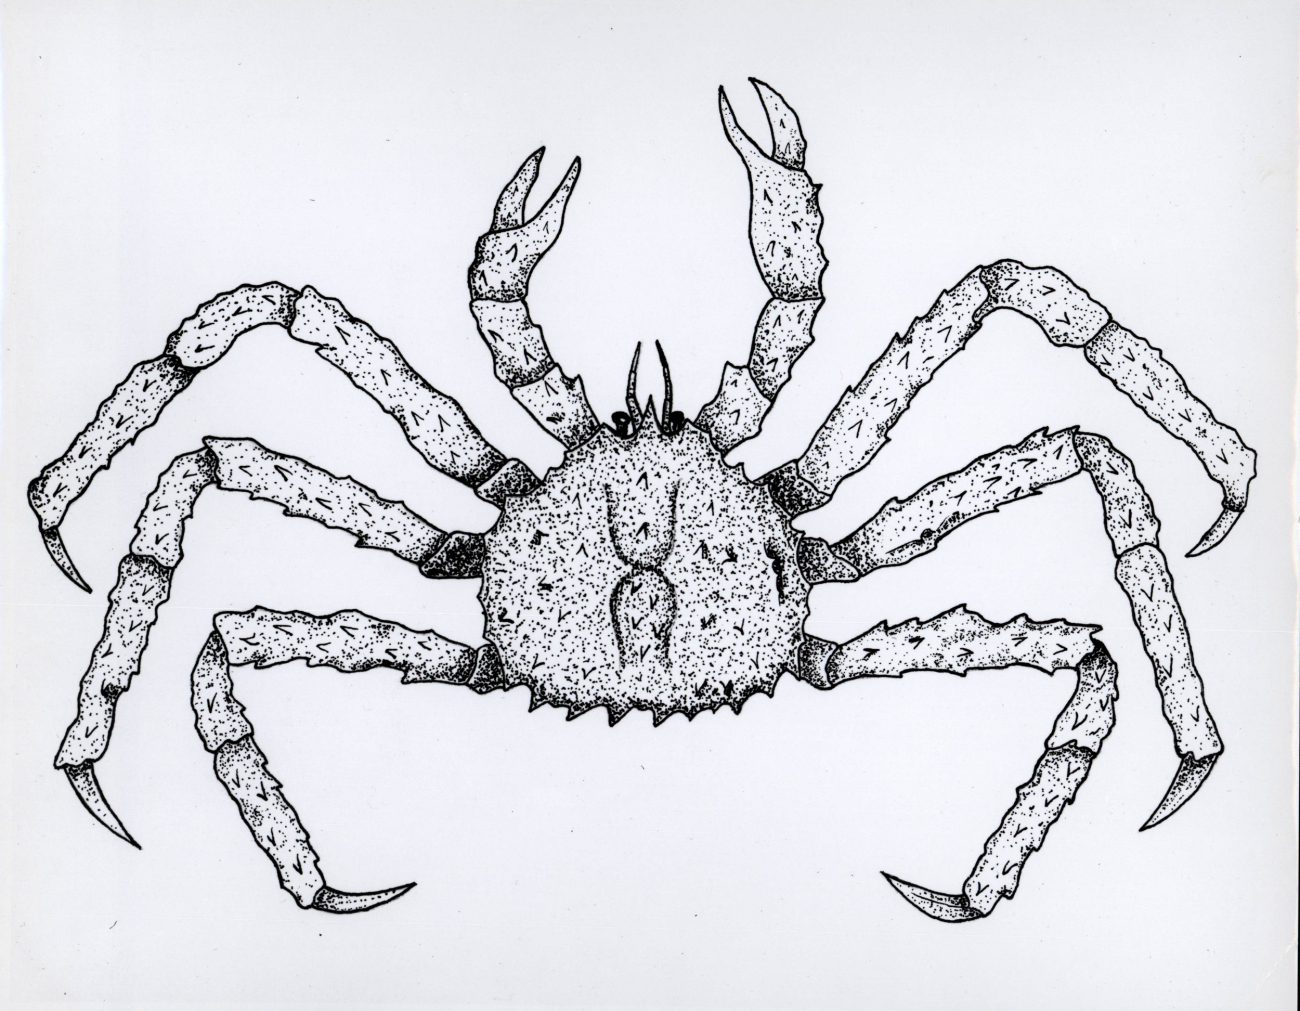 Artwork - The Alaska king crab (Paralithodes camtschatica)